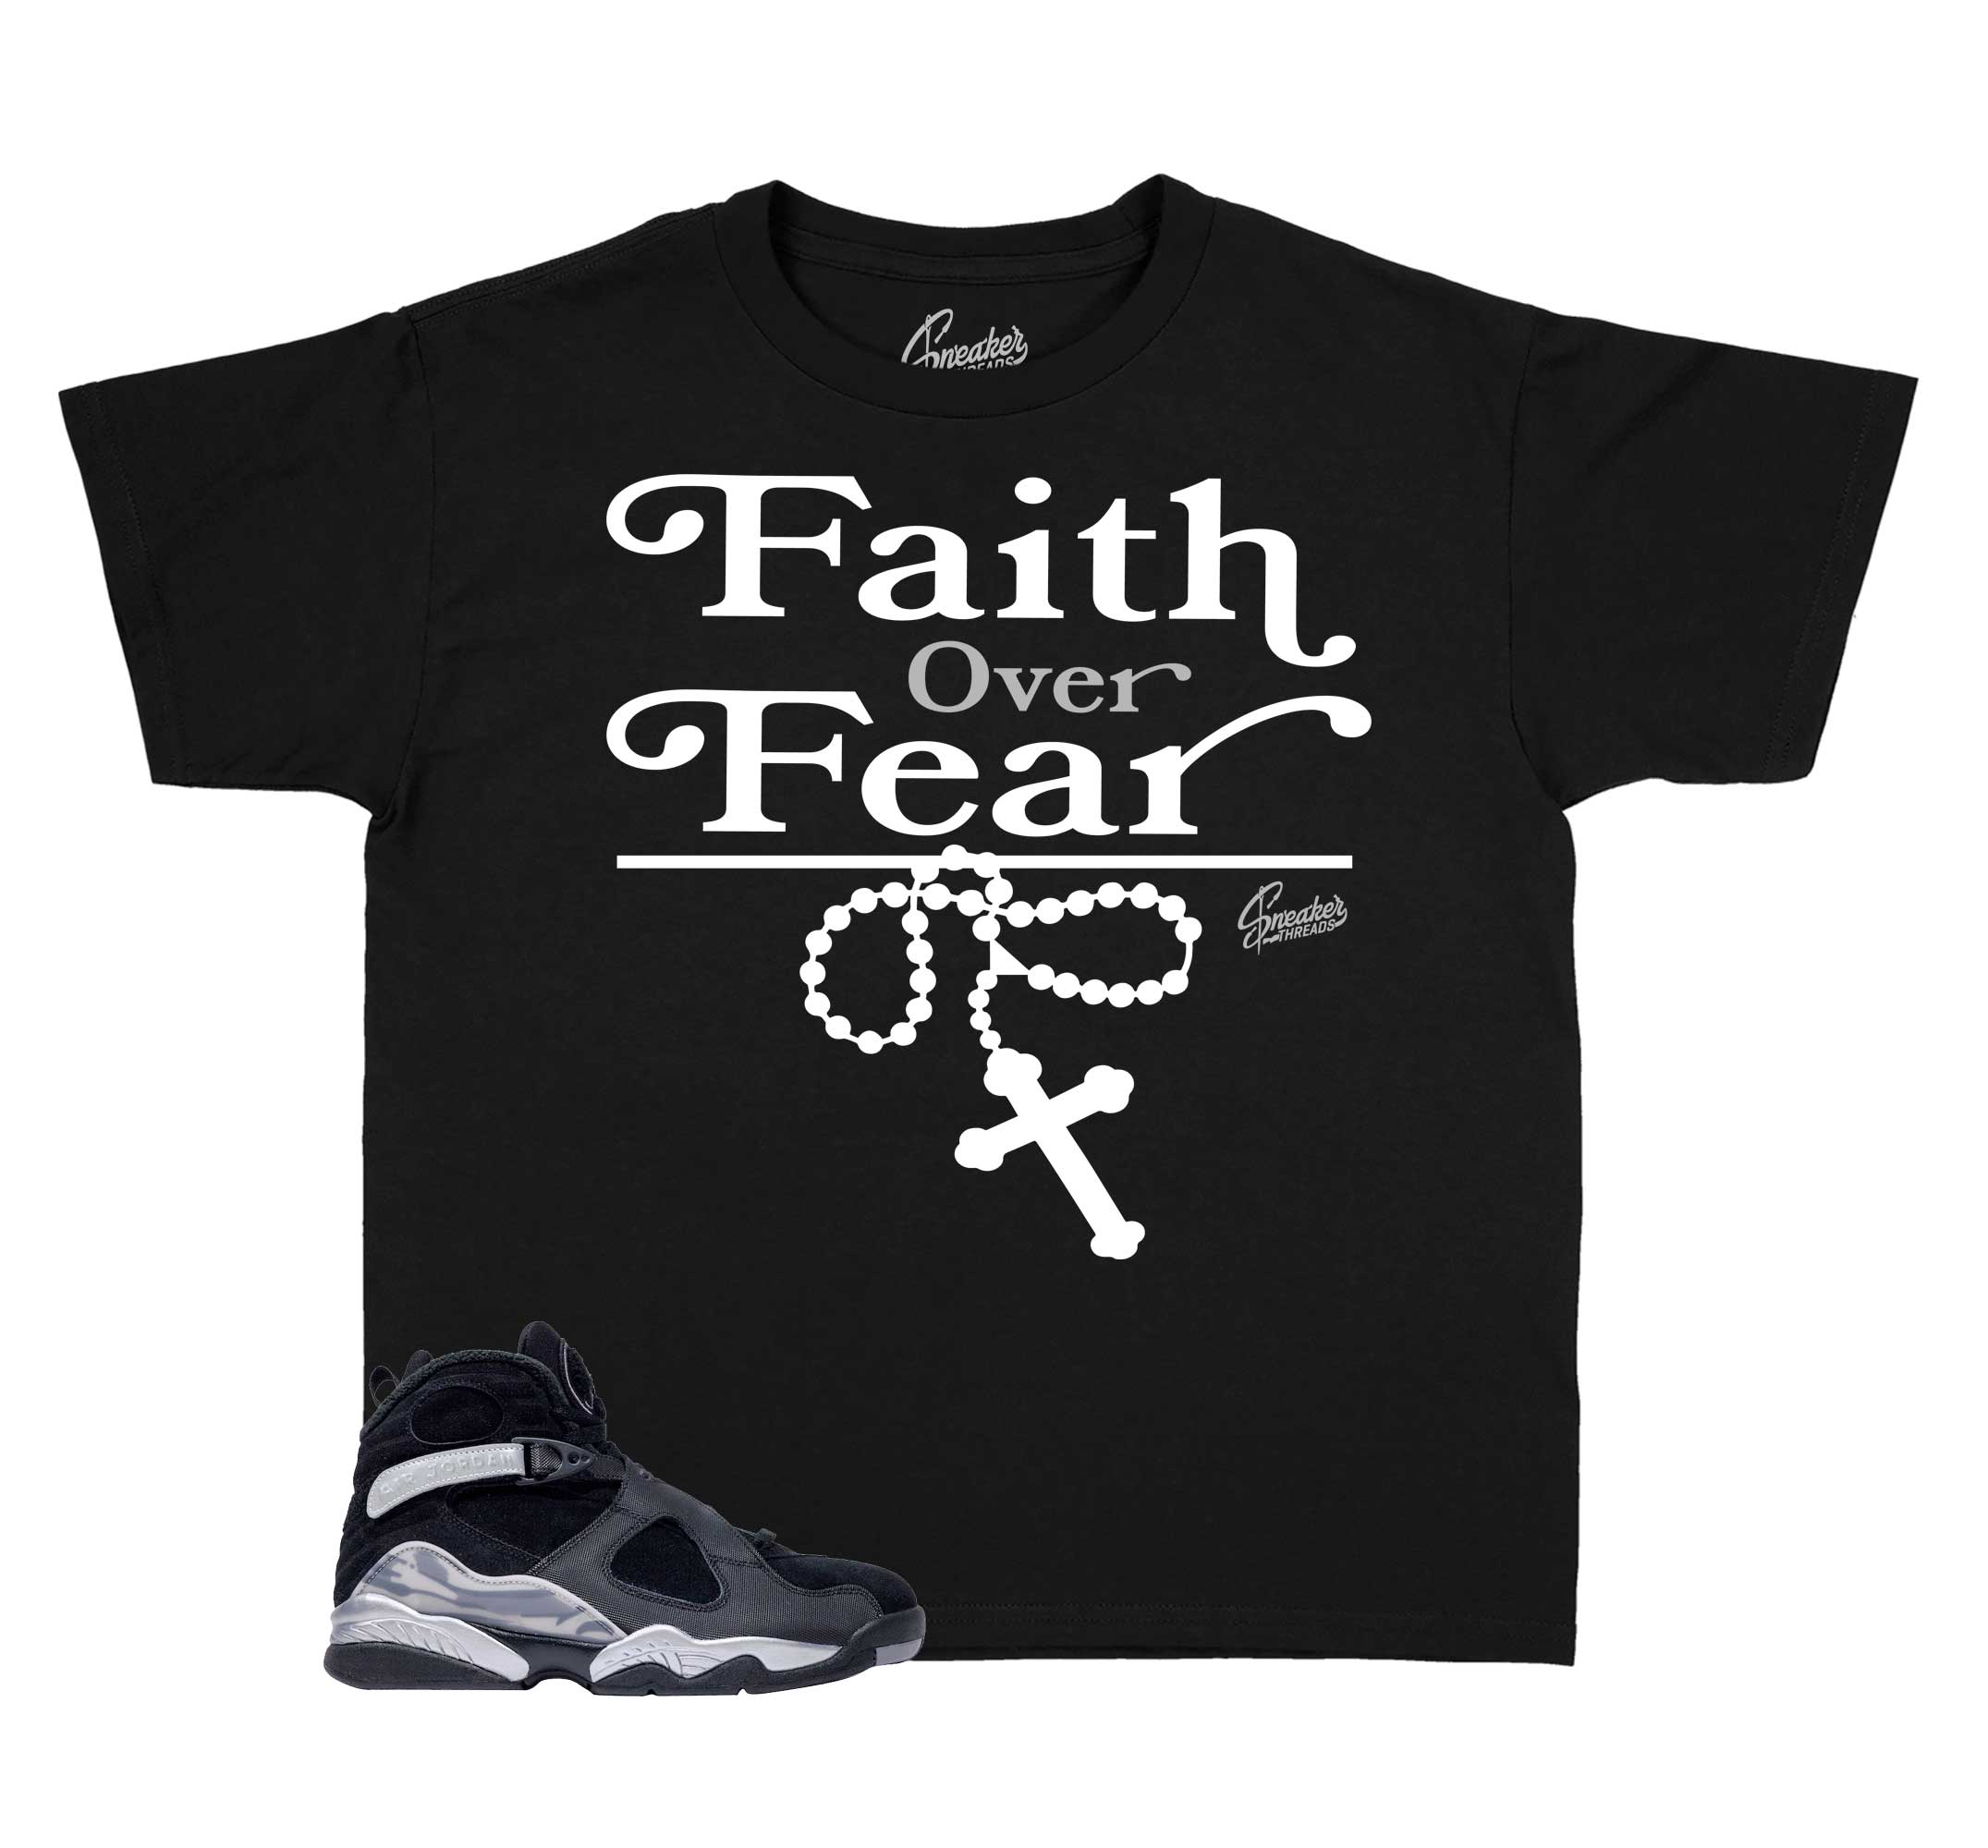 Kids Gunsmoke 8 Shirt - Faith Over Fear - Black